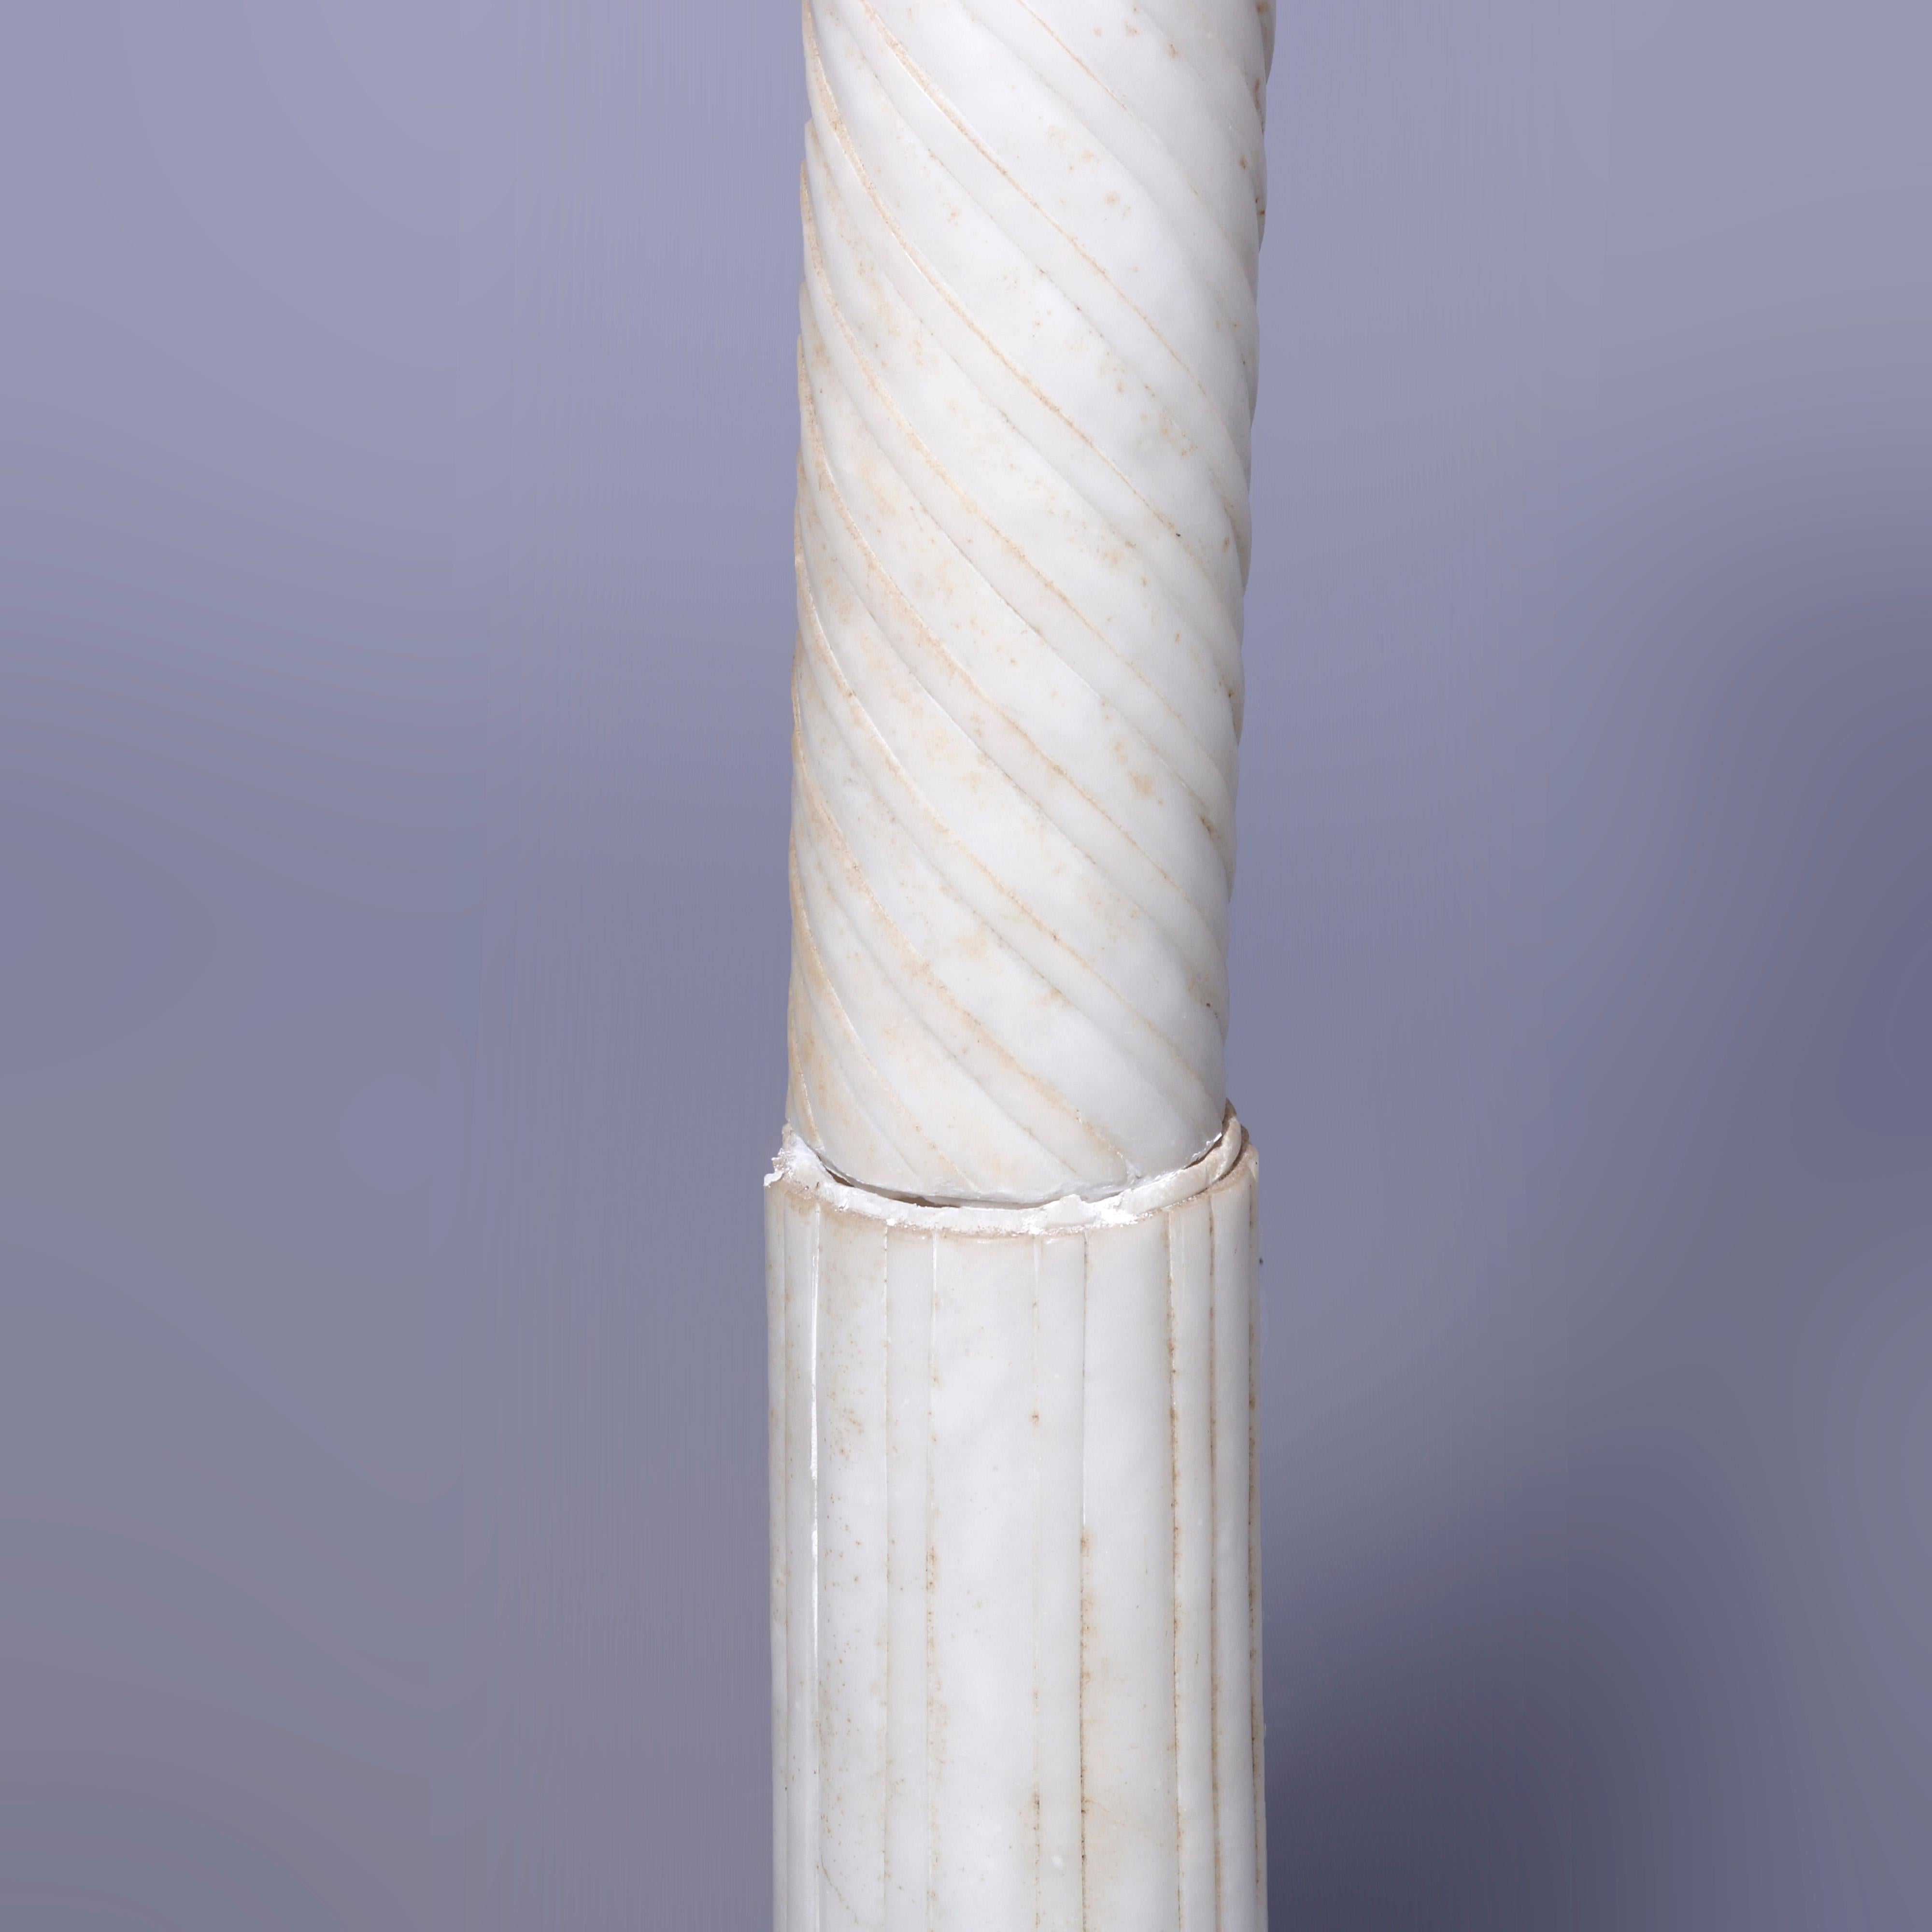 Antique Neoclassical Carved Alabaster Sculpture Pedestal, Rope Twist Form, 1890 For Sale 6